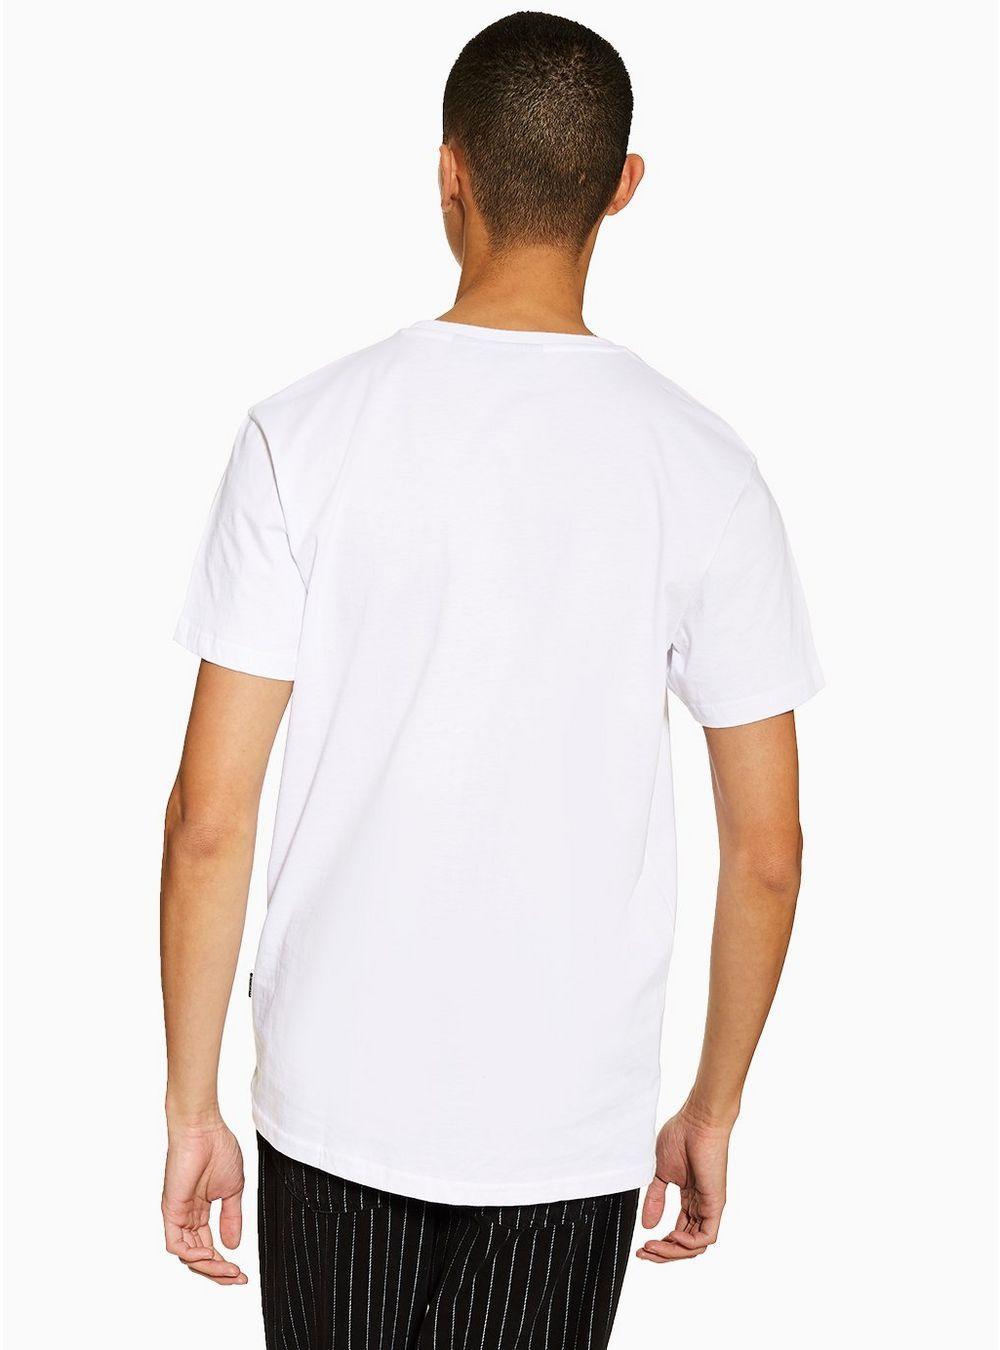 White Cross Clothing Logo - NICCE White Logo T-Shirt - Men's T-Shirts & Vests - Clothing - TOPMAN